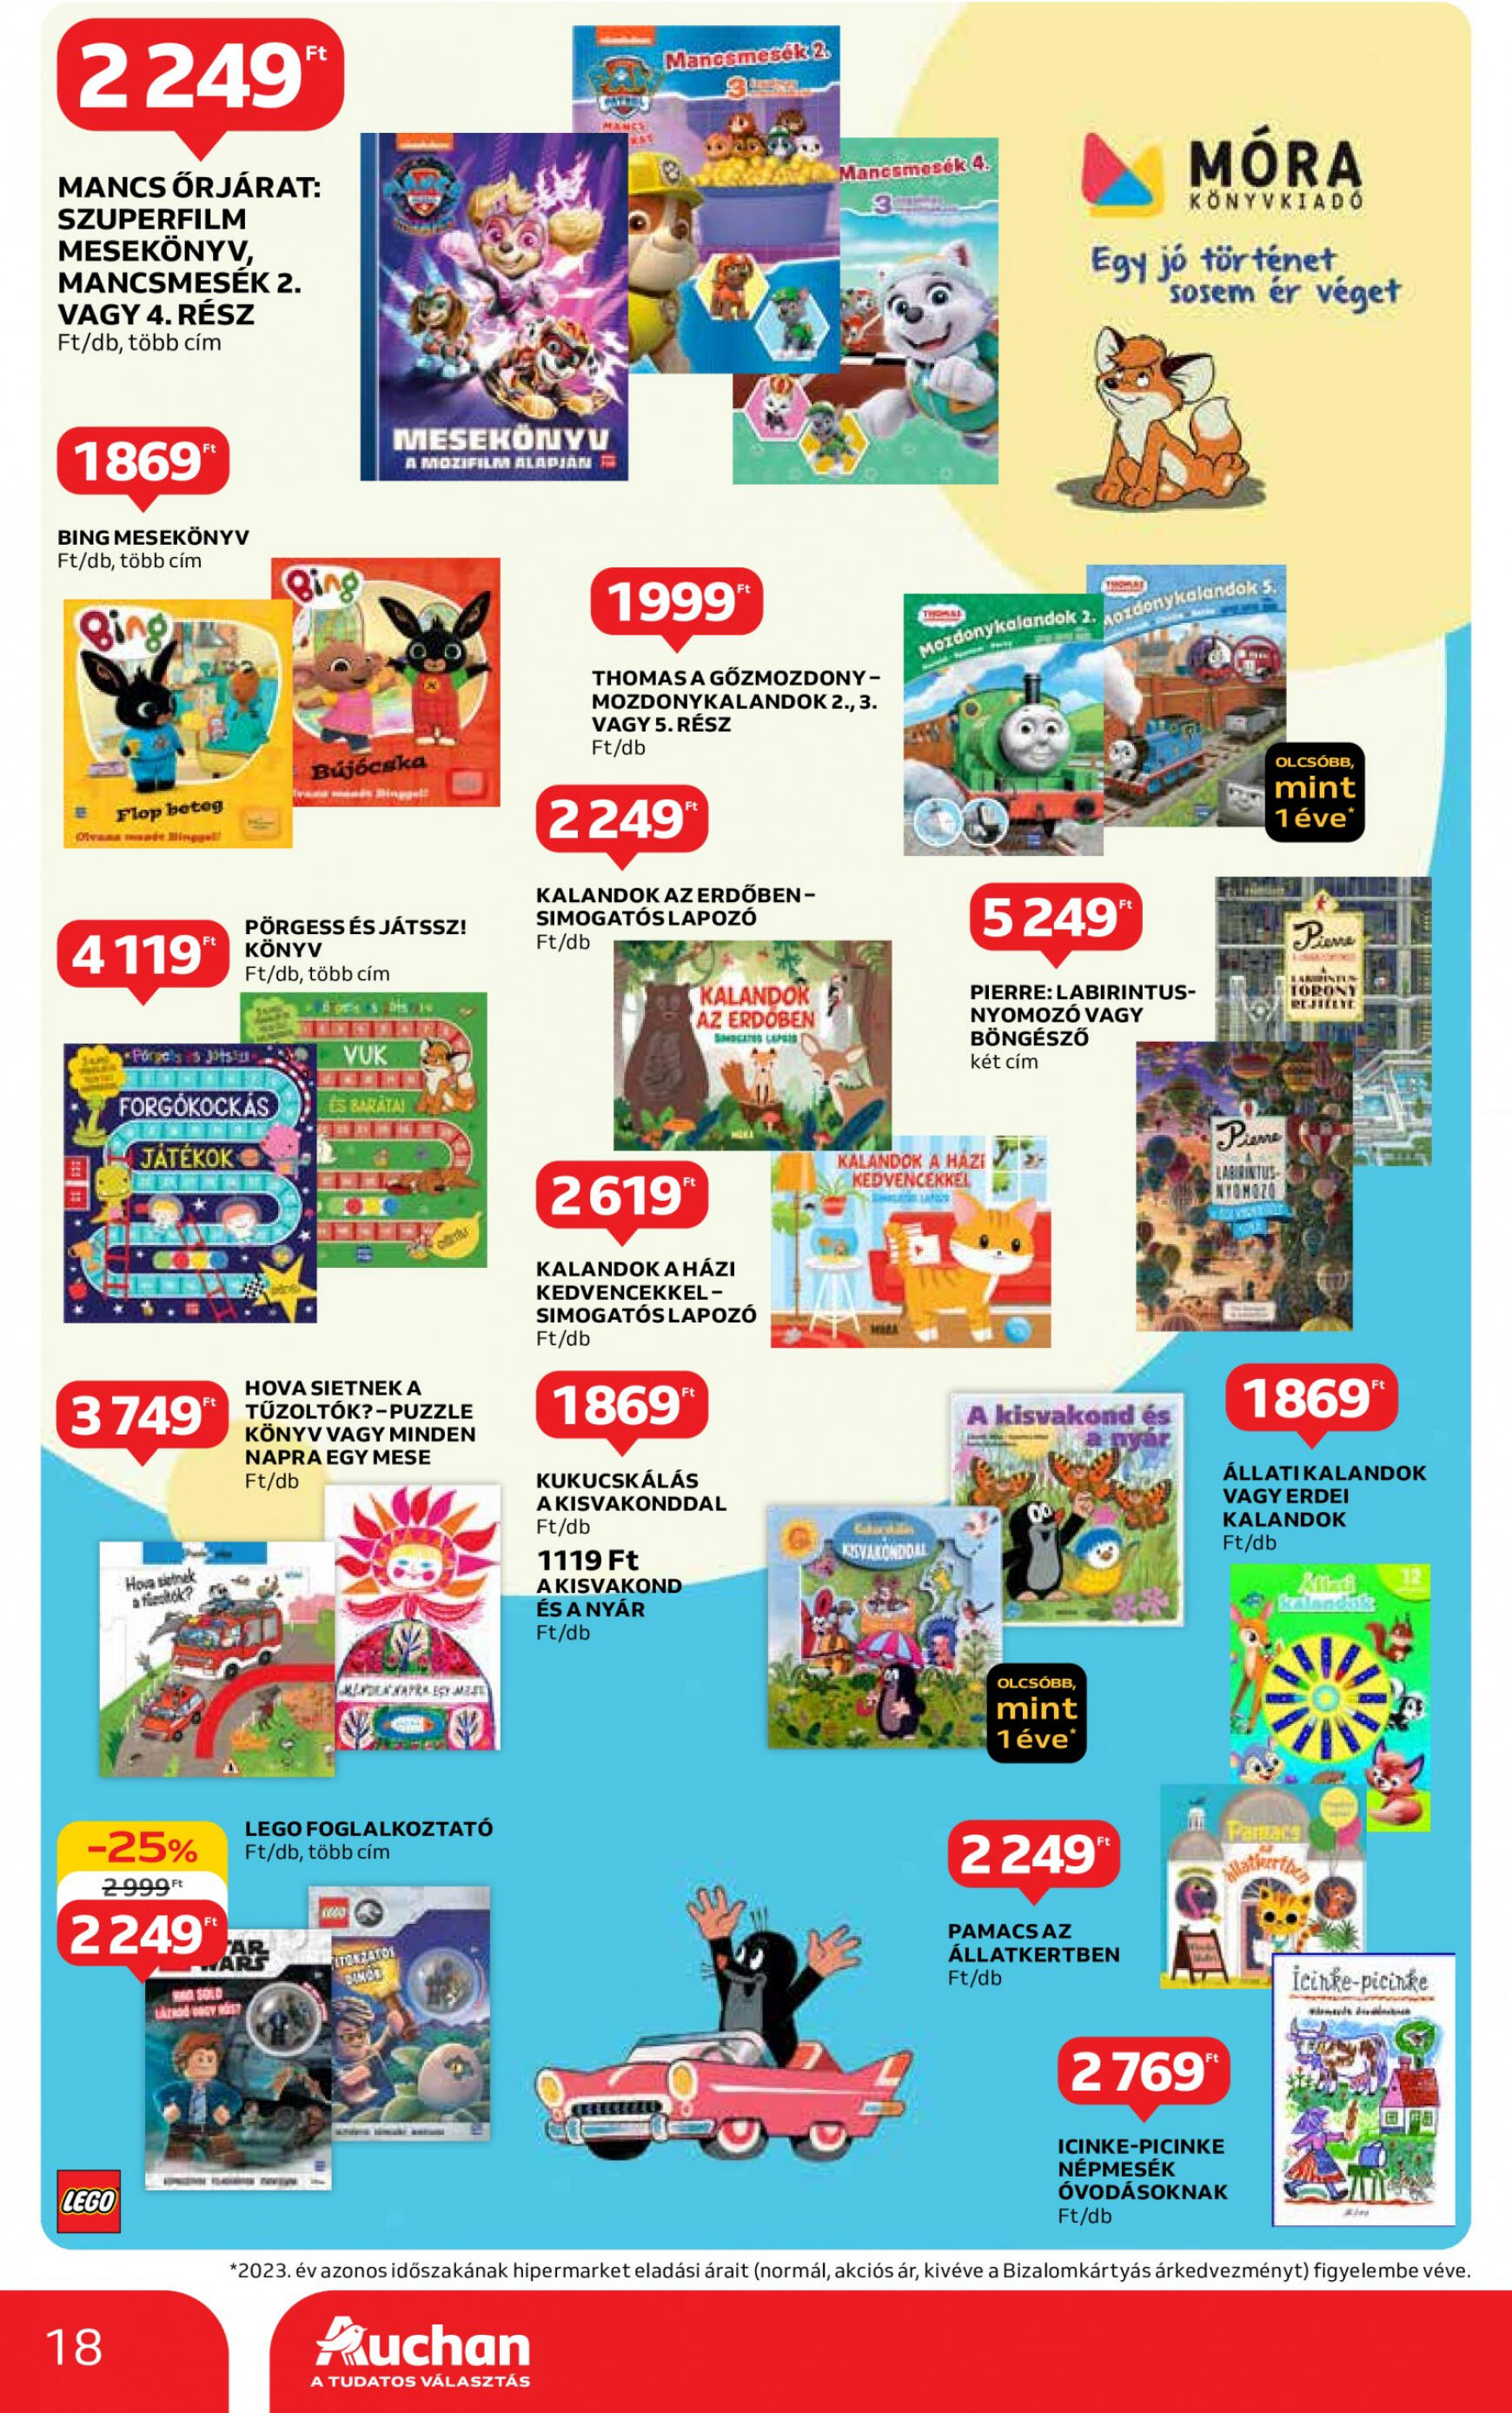 auchan - Aktuális újság Auchan 05.16. - 05.29. - page: 18